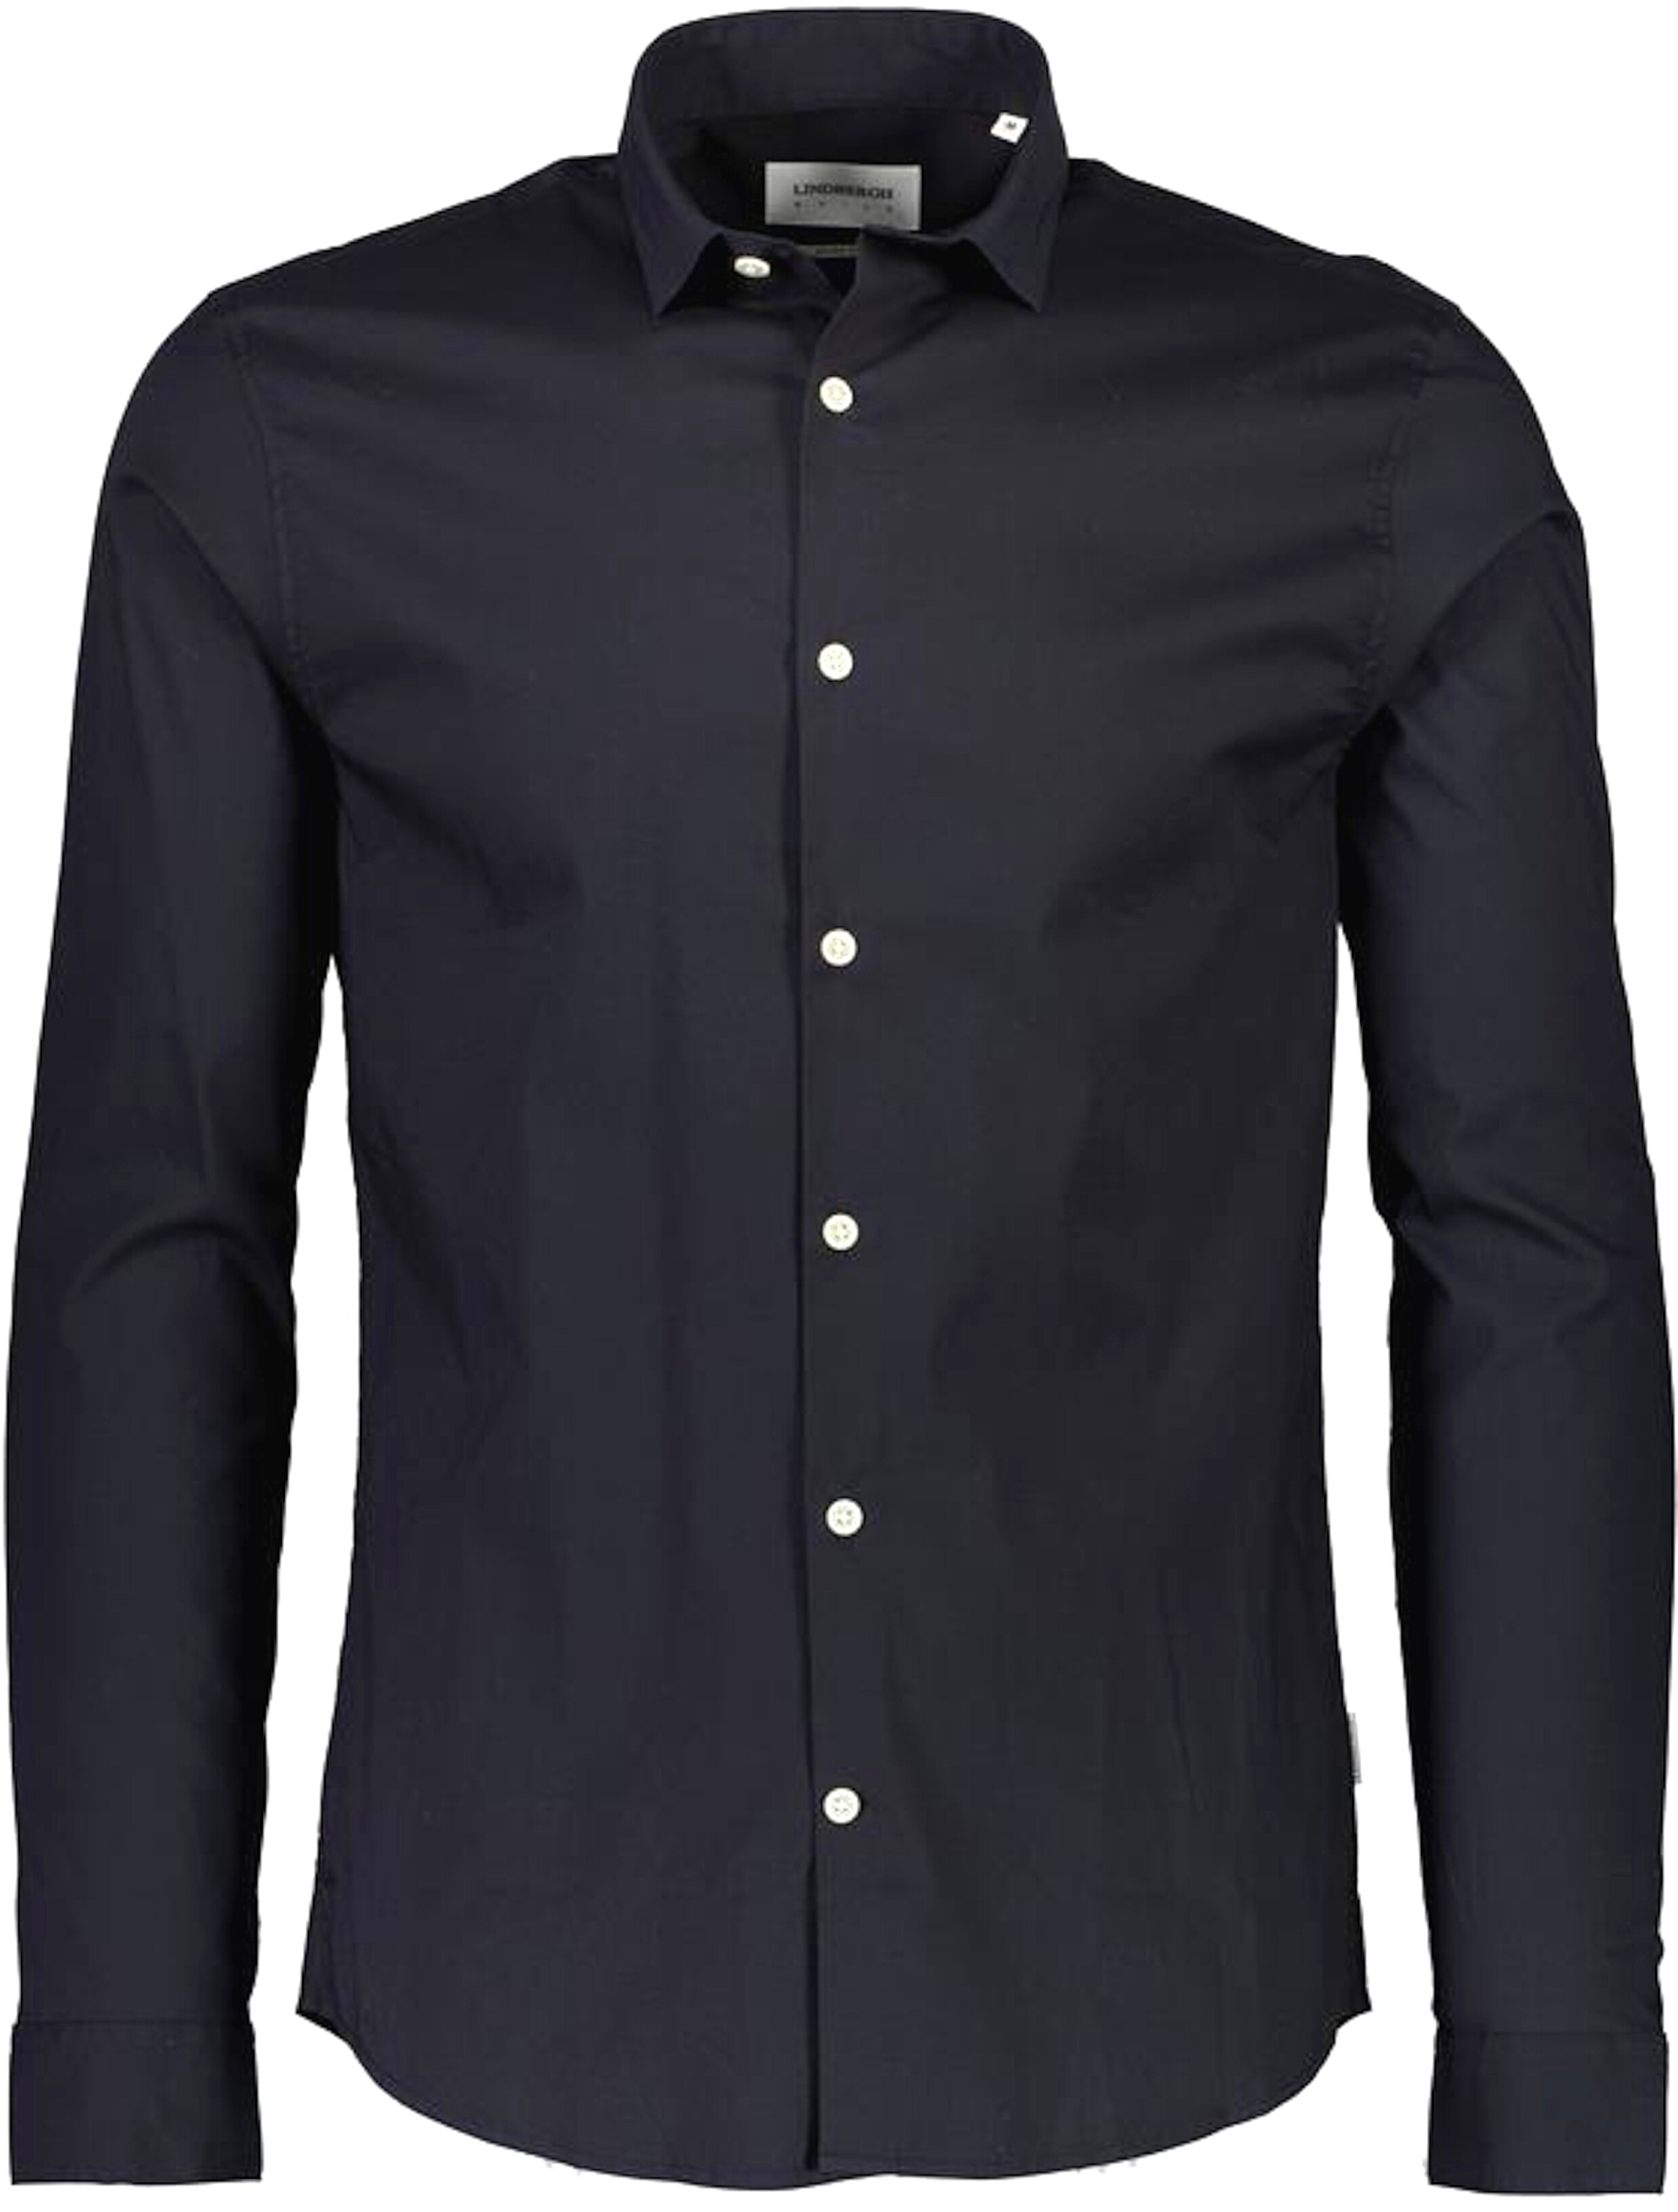 Lindbergh Business casual skjorte sort / black